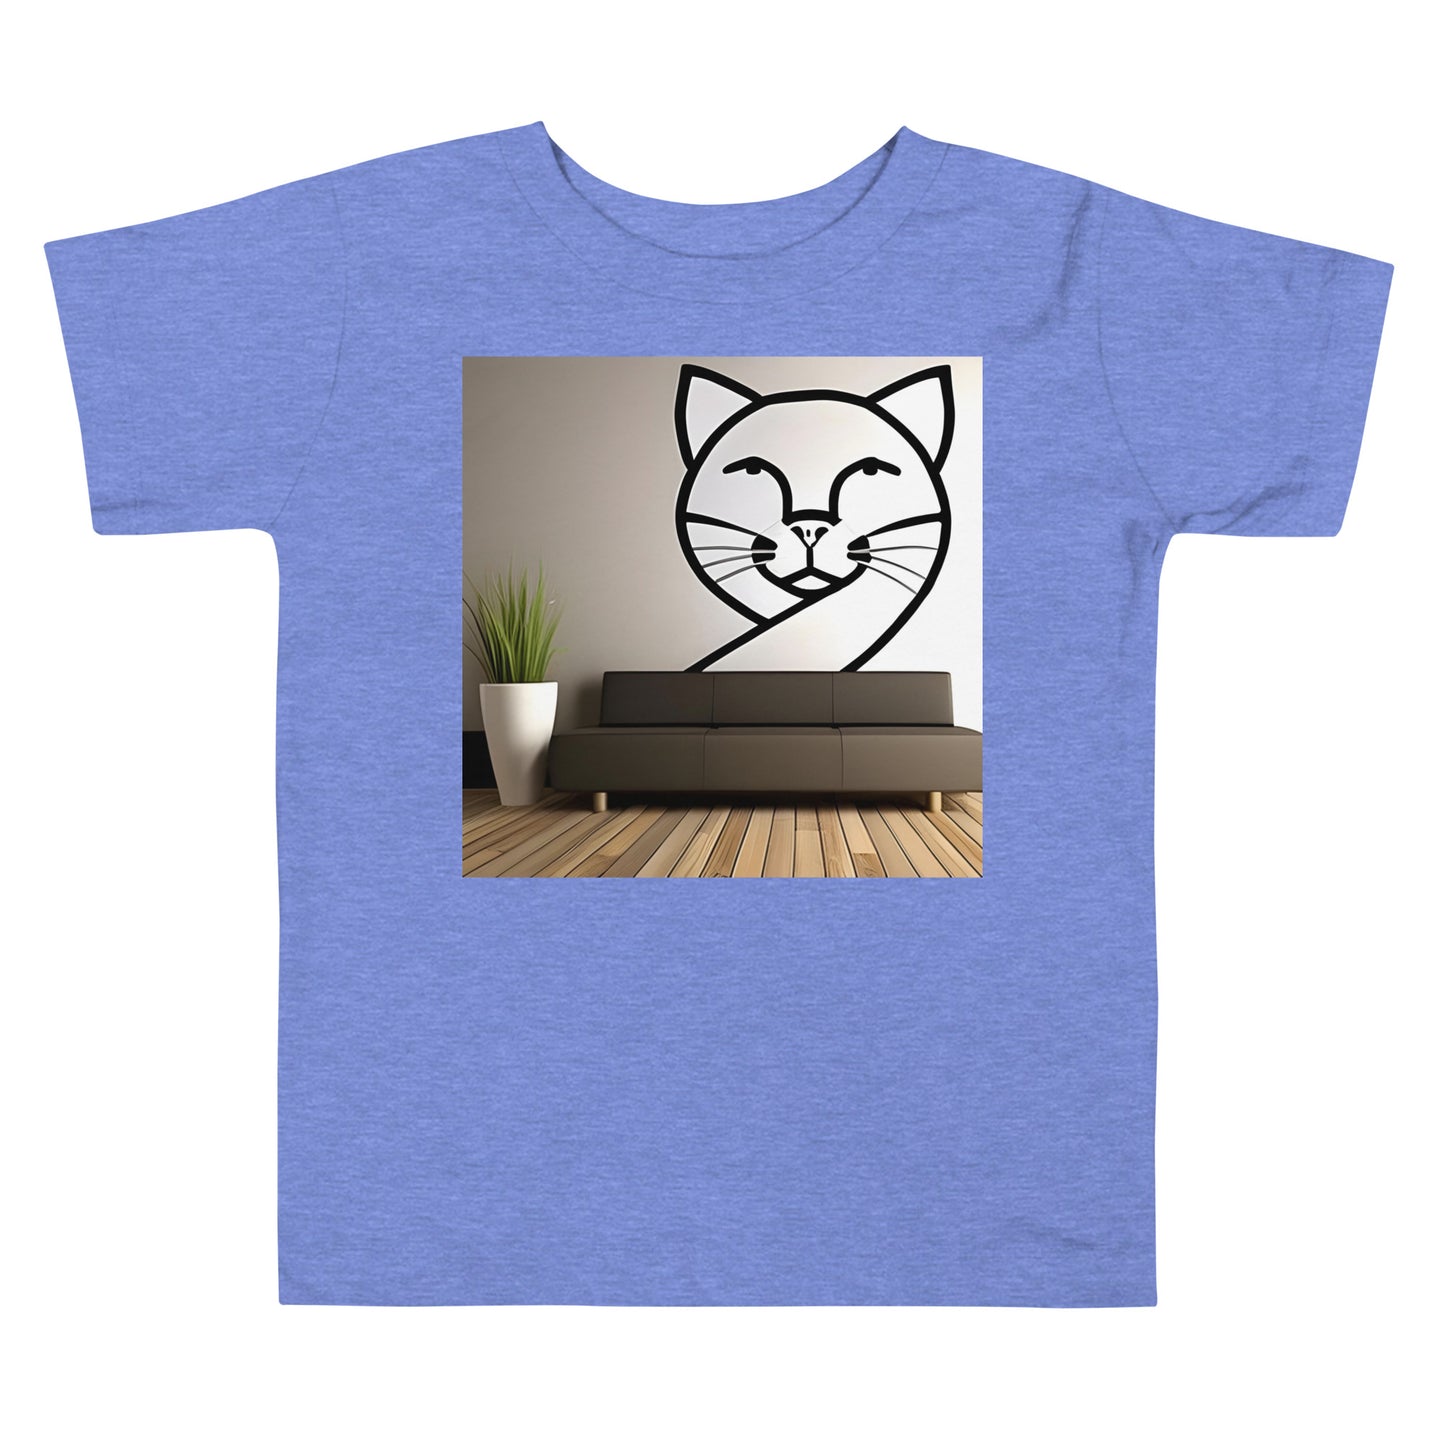 Purradise Toddler's T-Shirt - 038